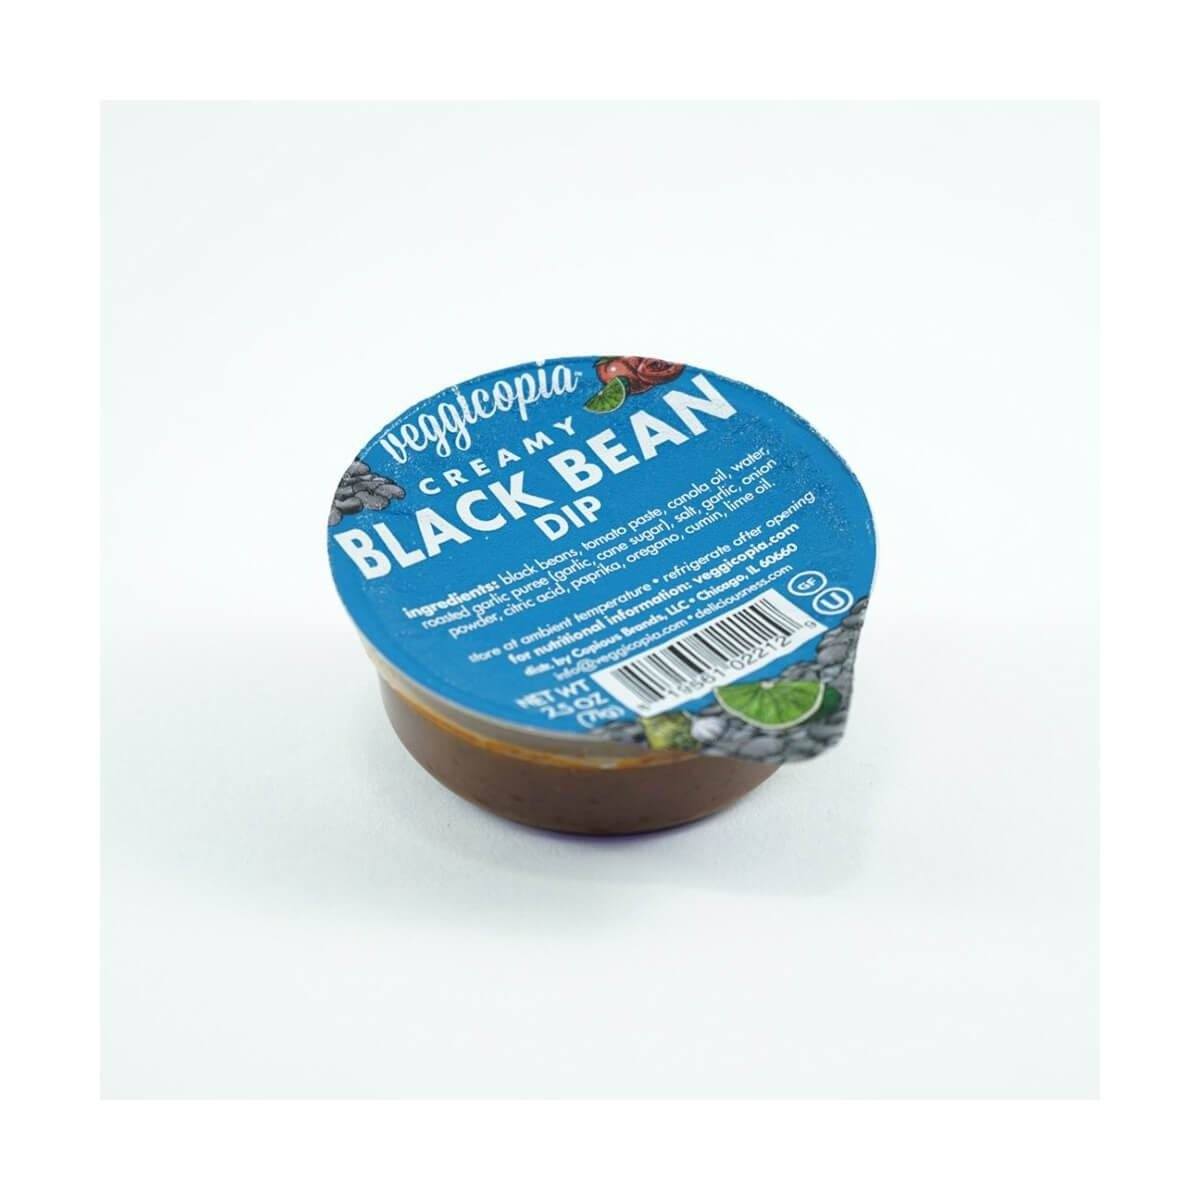 Creamy Black Bean Dip 2.5 oz (24 Pack)